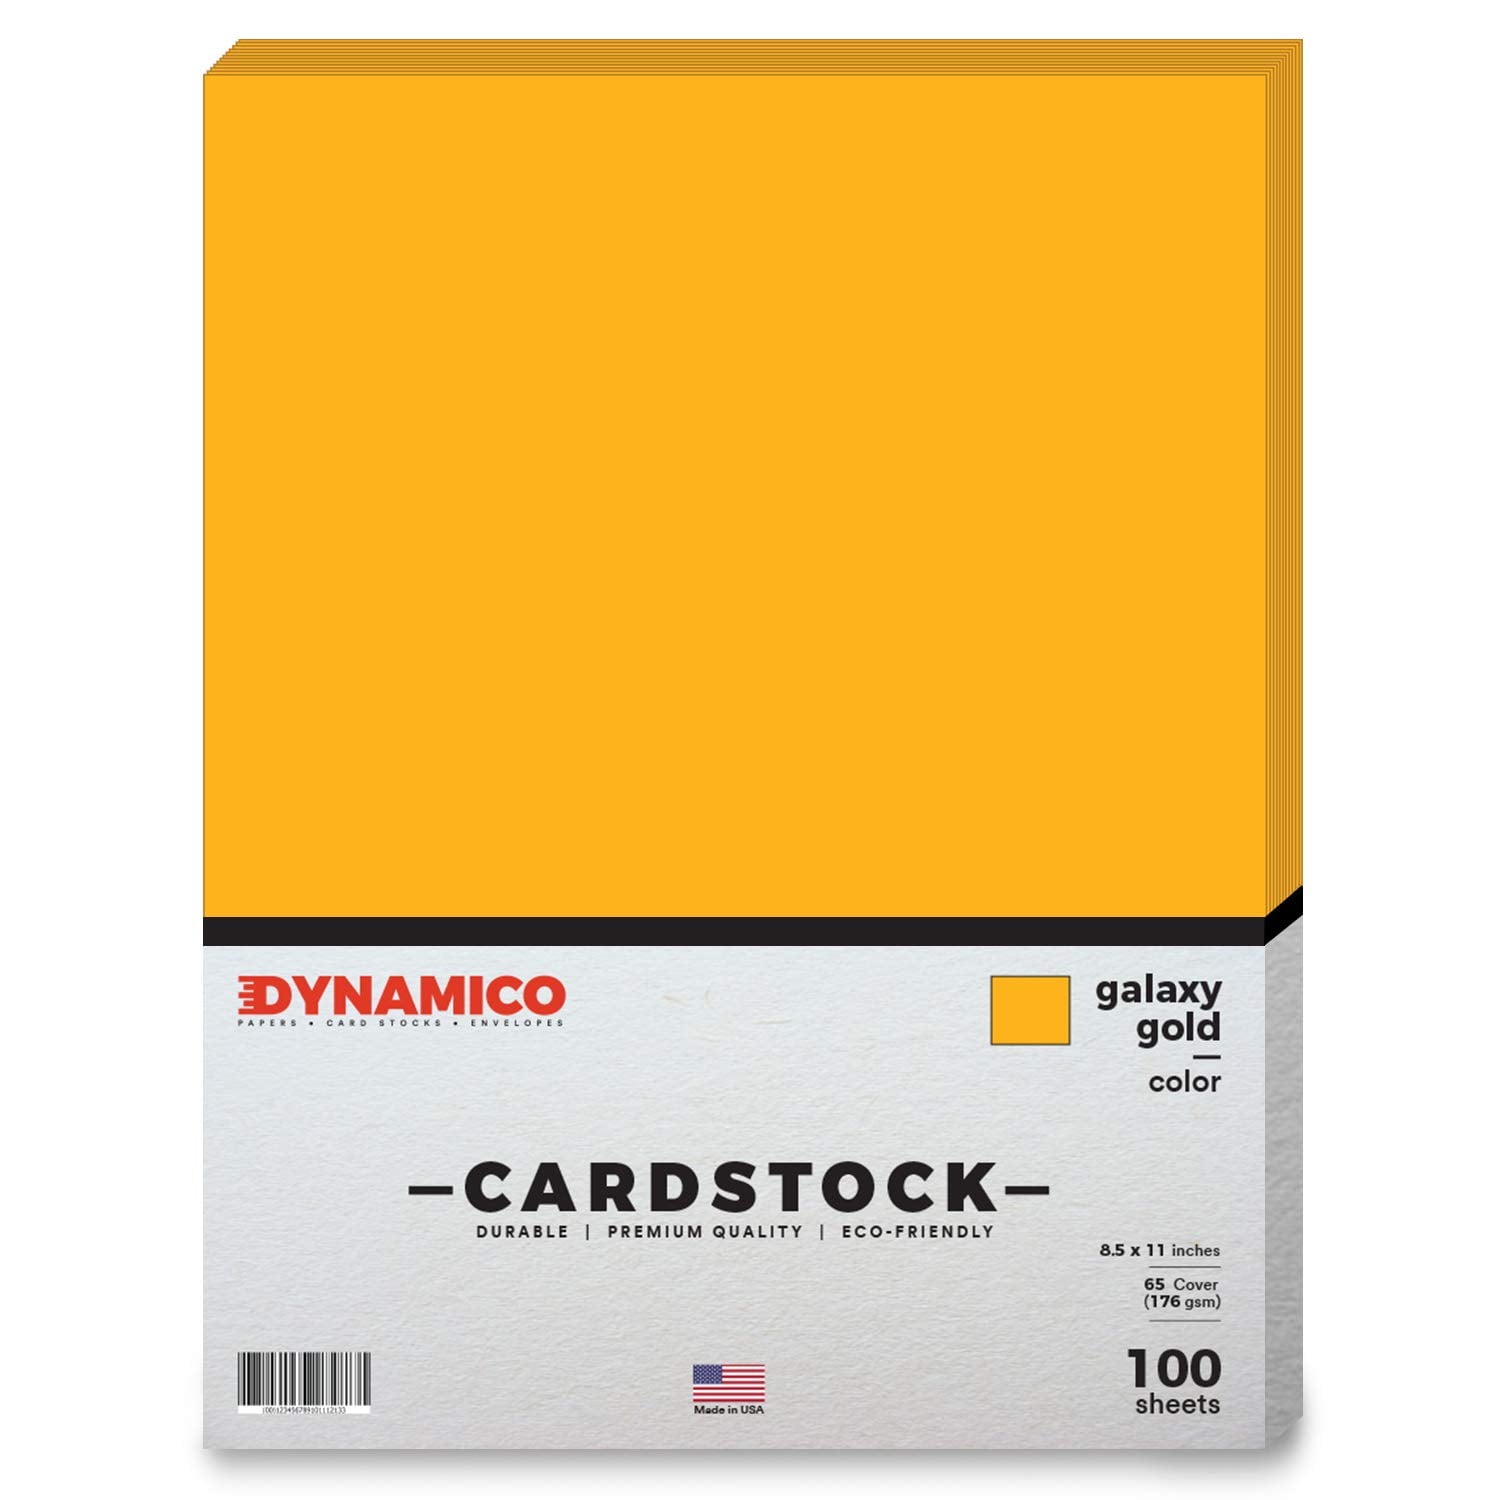  JAM PAPER Matte 65lb Cardstock - 8.5 x 11 Coverstock